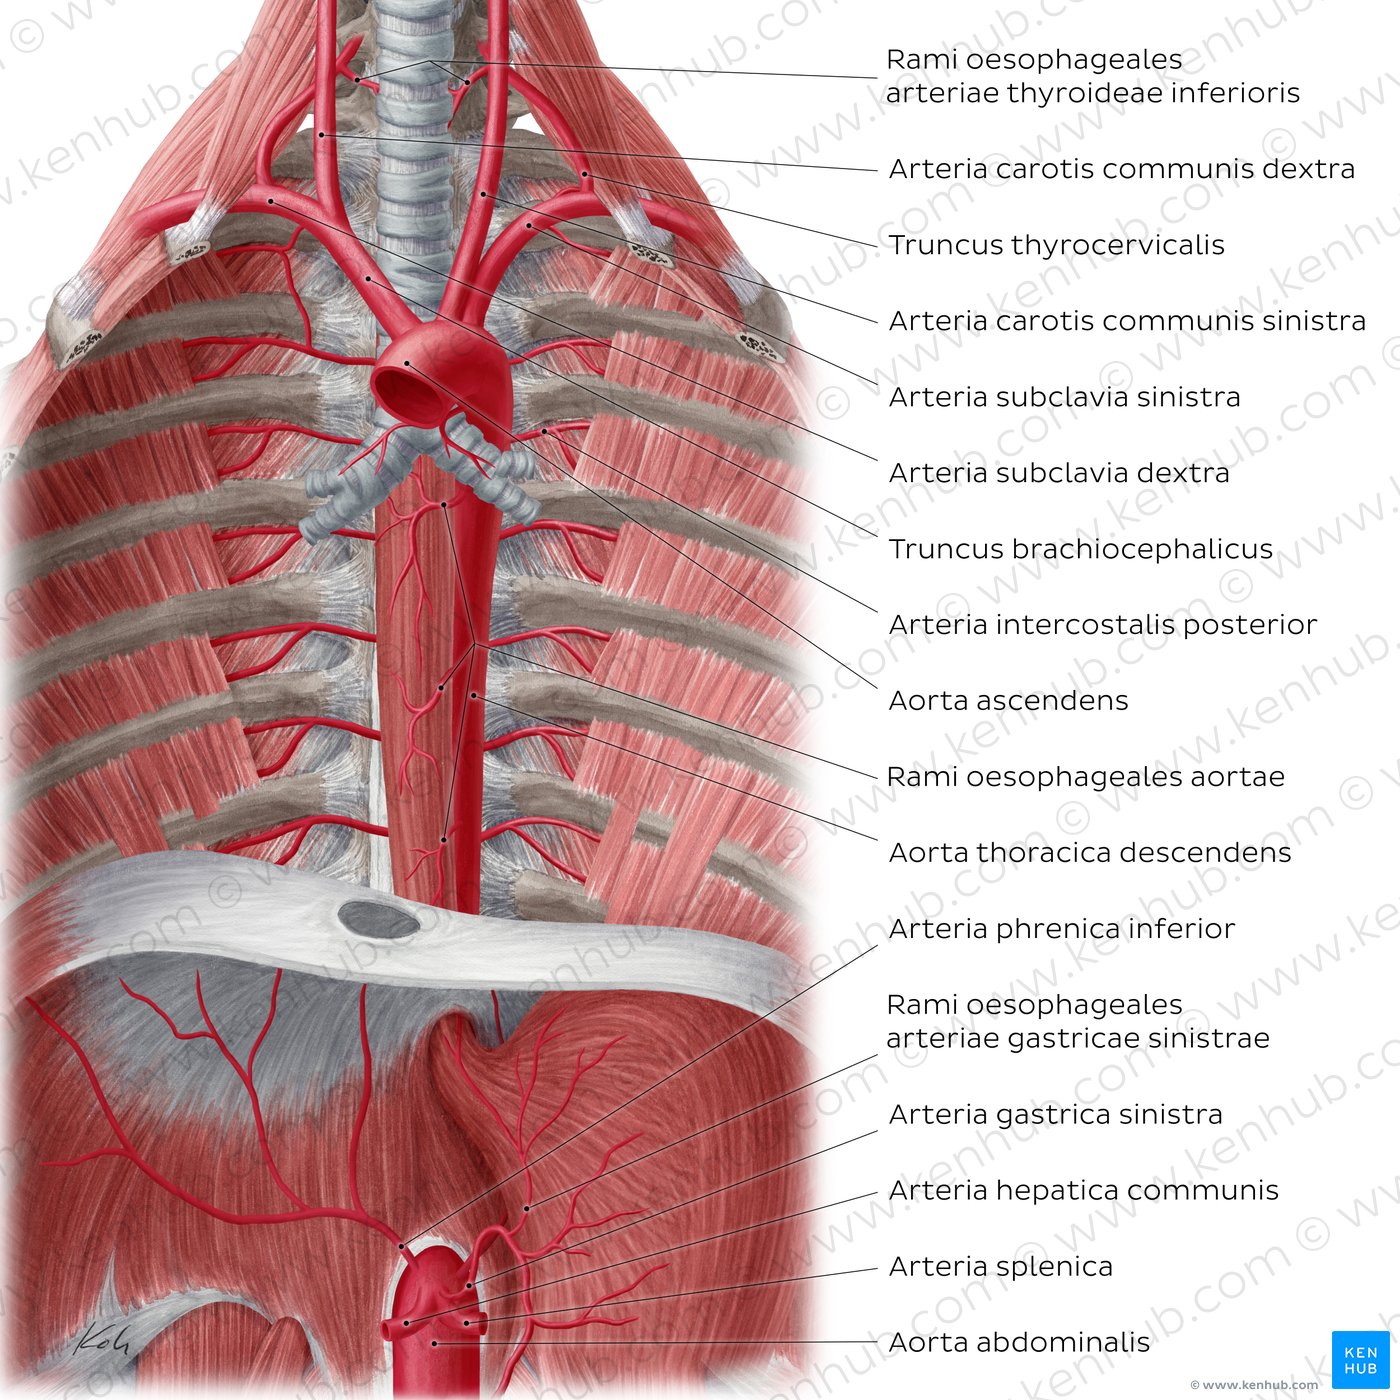 Arteriae of the oesophagus (anterior view)